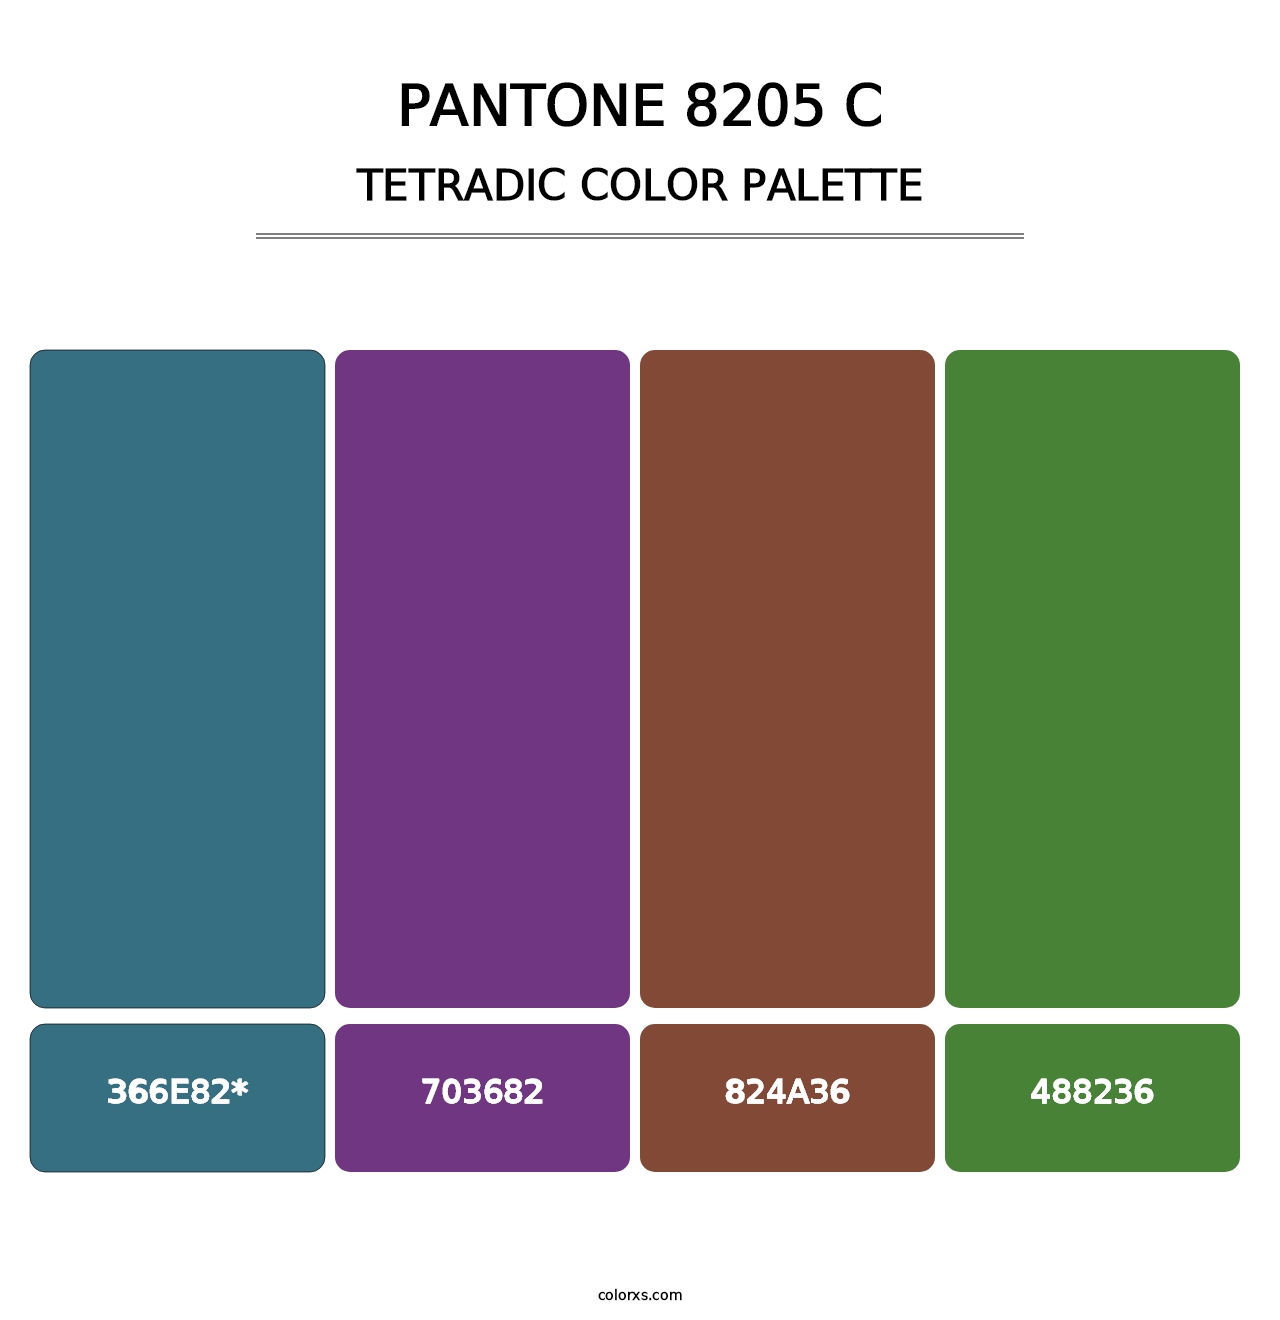 PANTONE 8205 C - Tetradic Color Palette